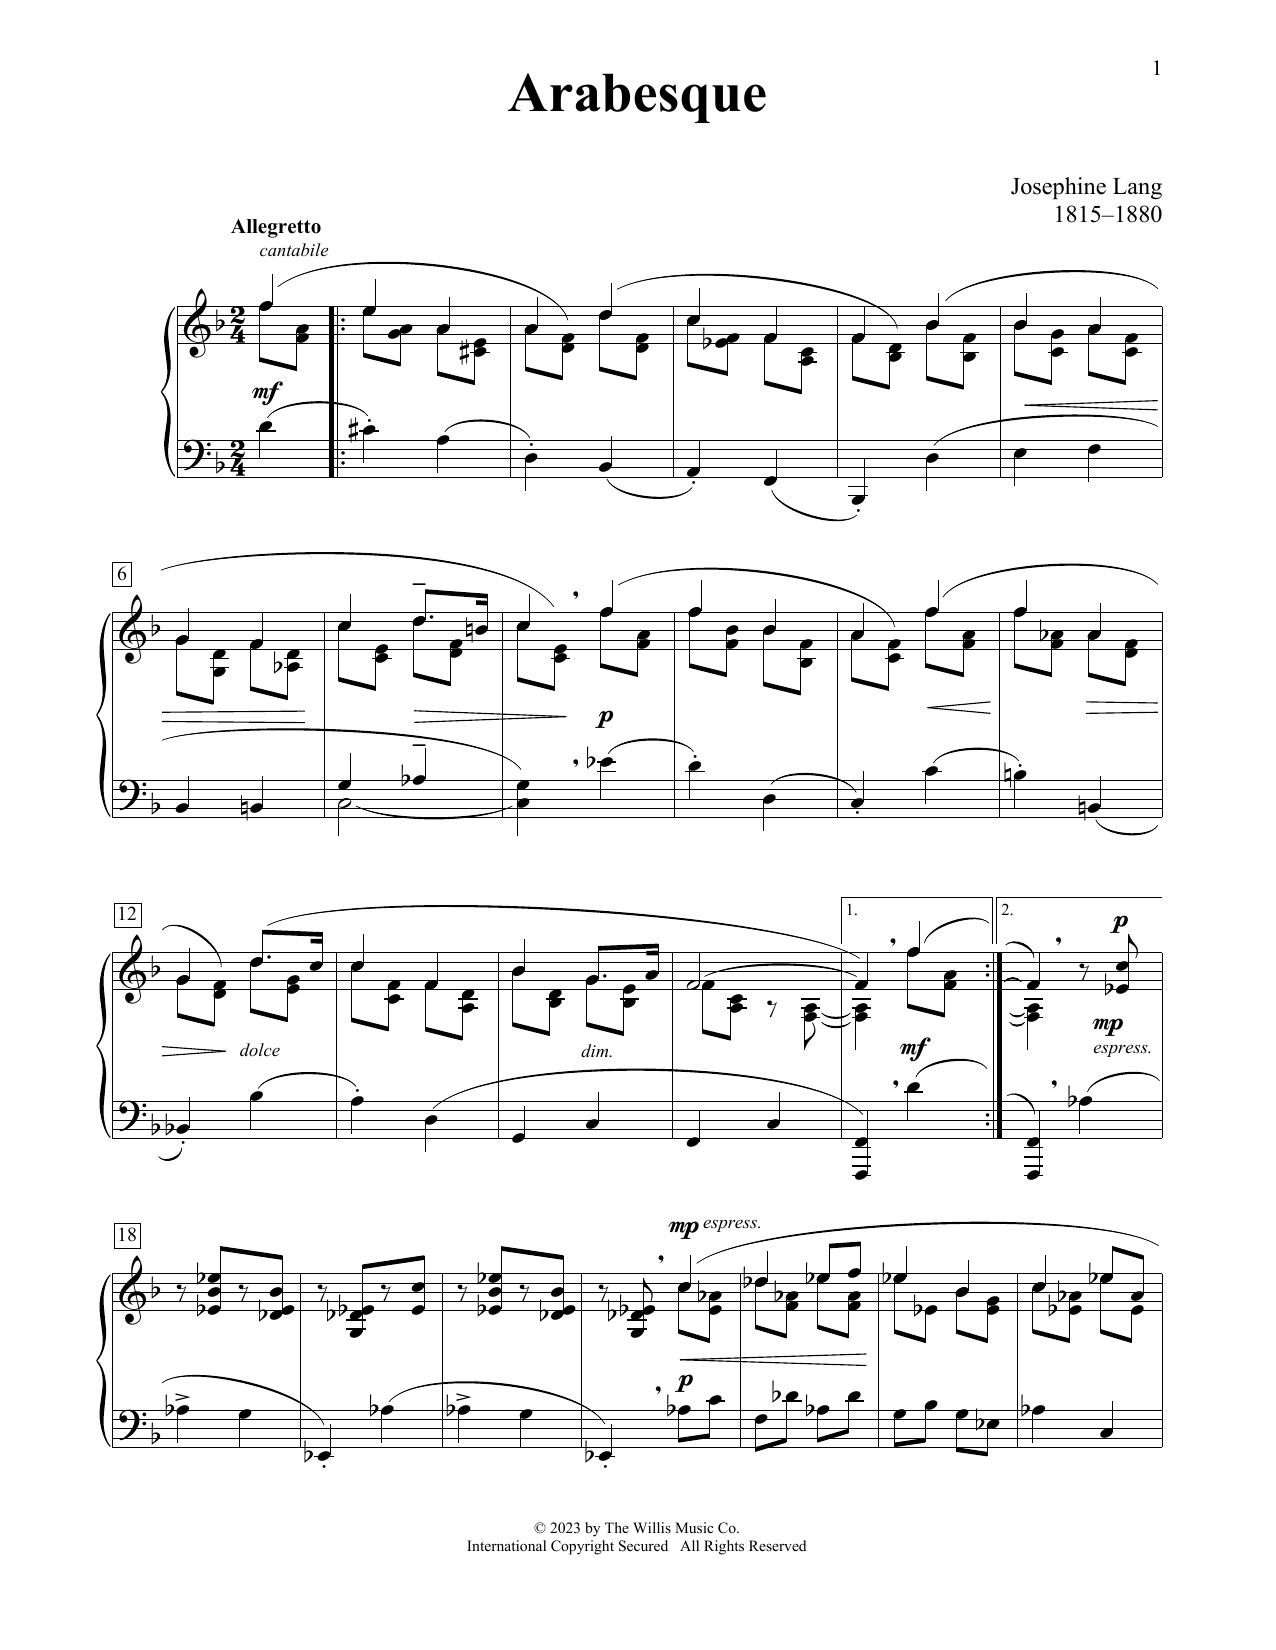 Josephine Lang Arabesque sheet music notes printable PDF score